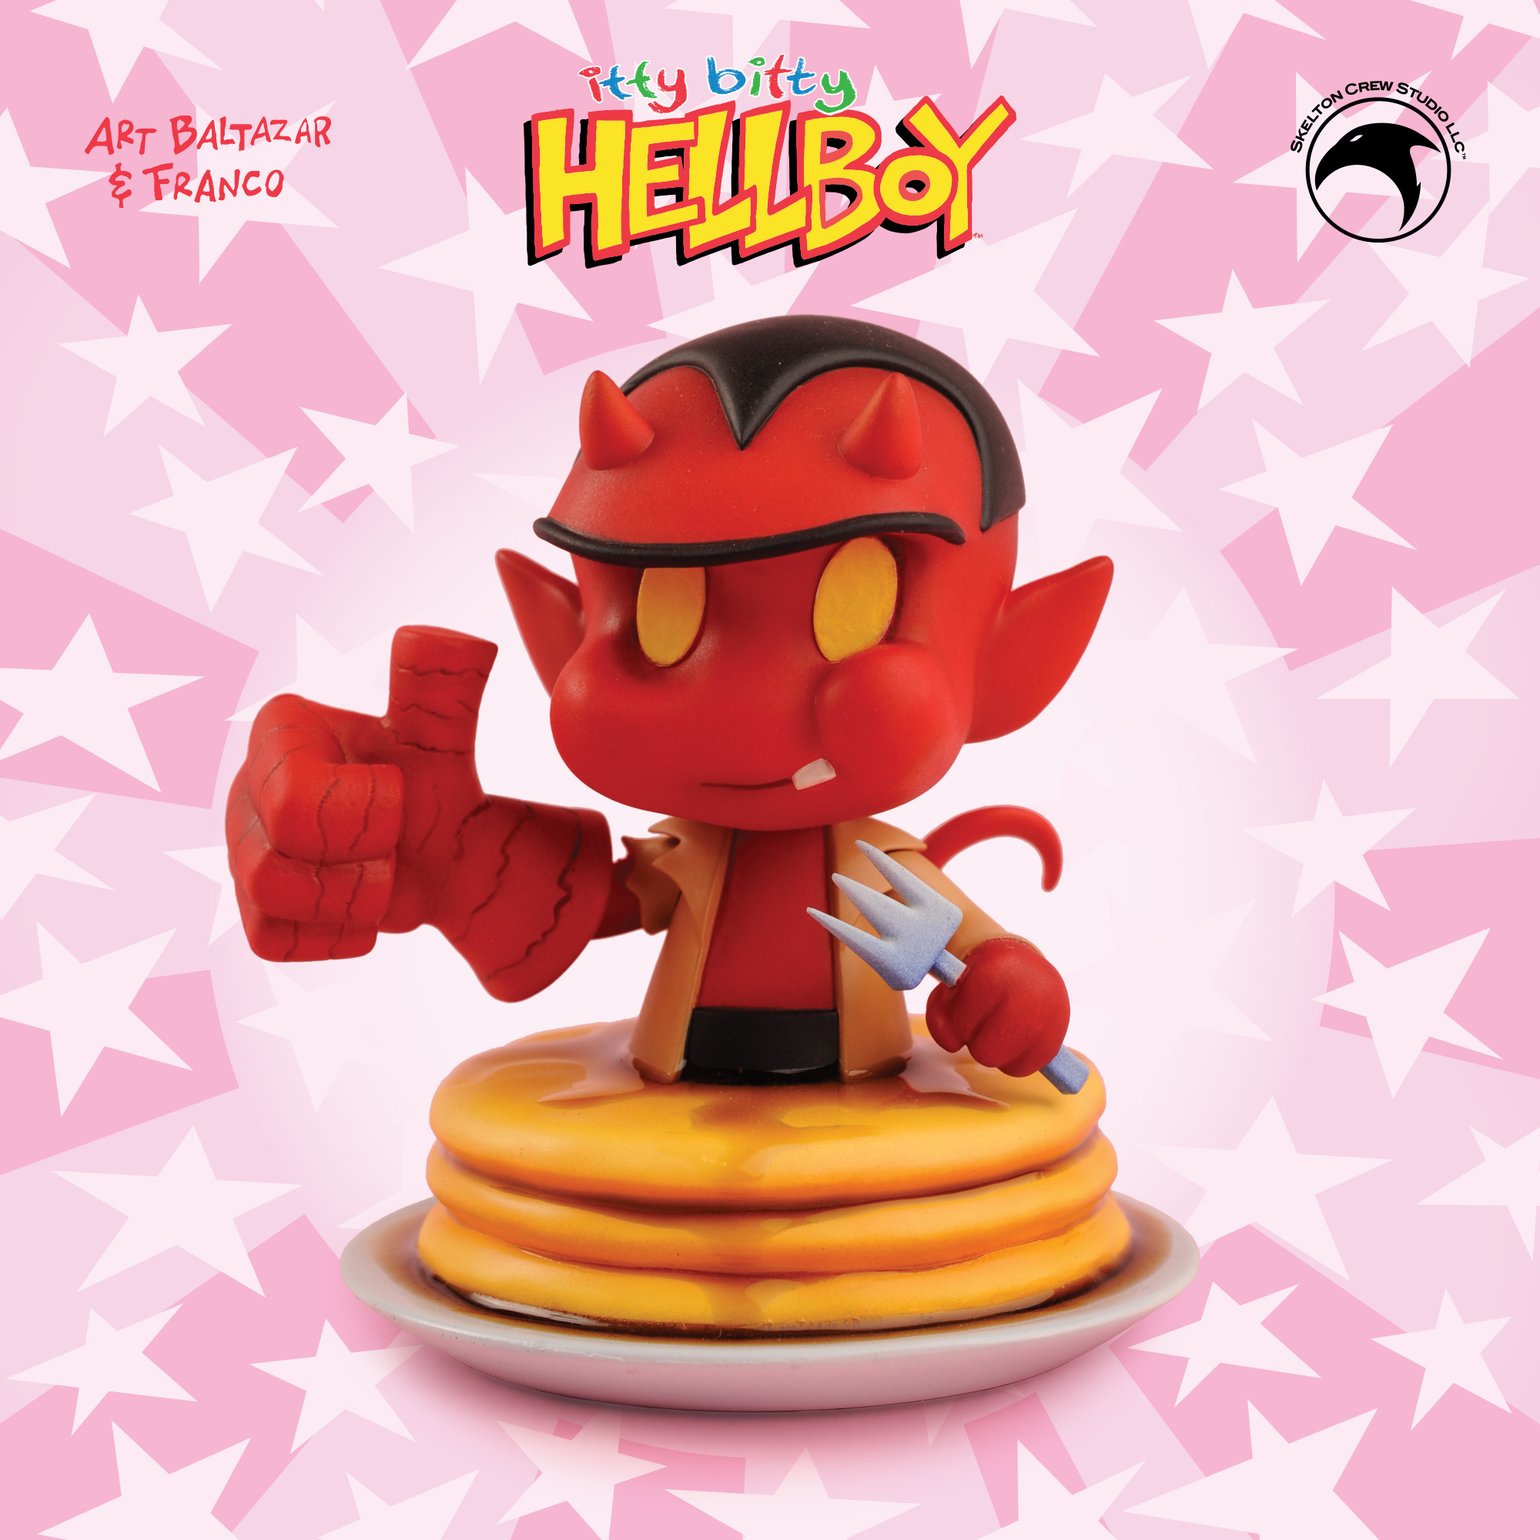 Hellboy: Limited Edition itty bitty Hellboy statue! Less than 10